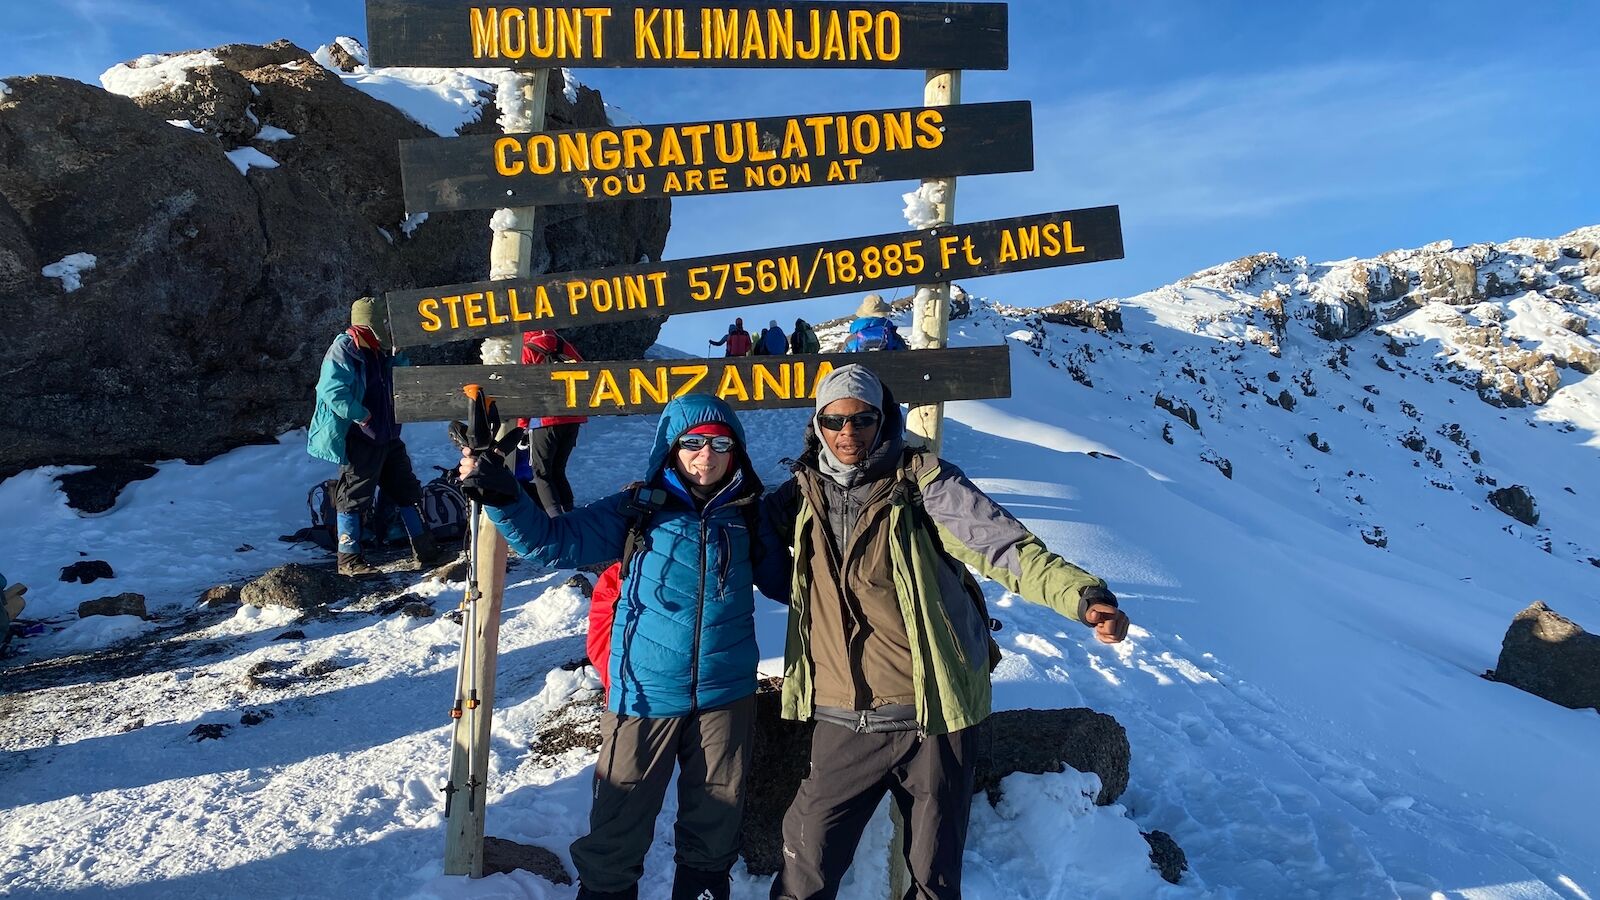 People at the top of Mount Kilimanjaro in Tanzania, where people speak Swahili